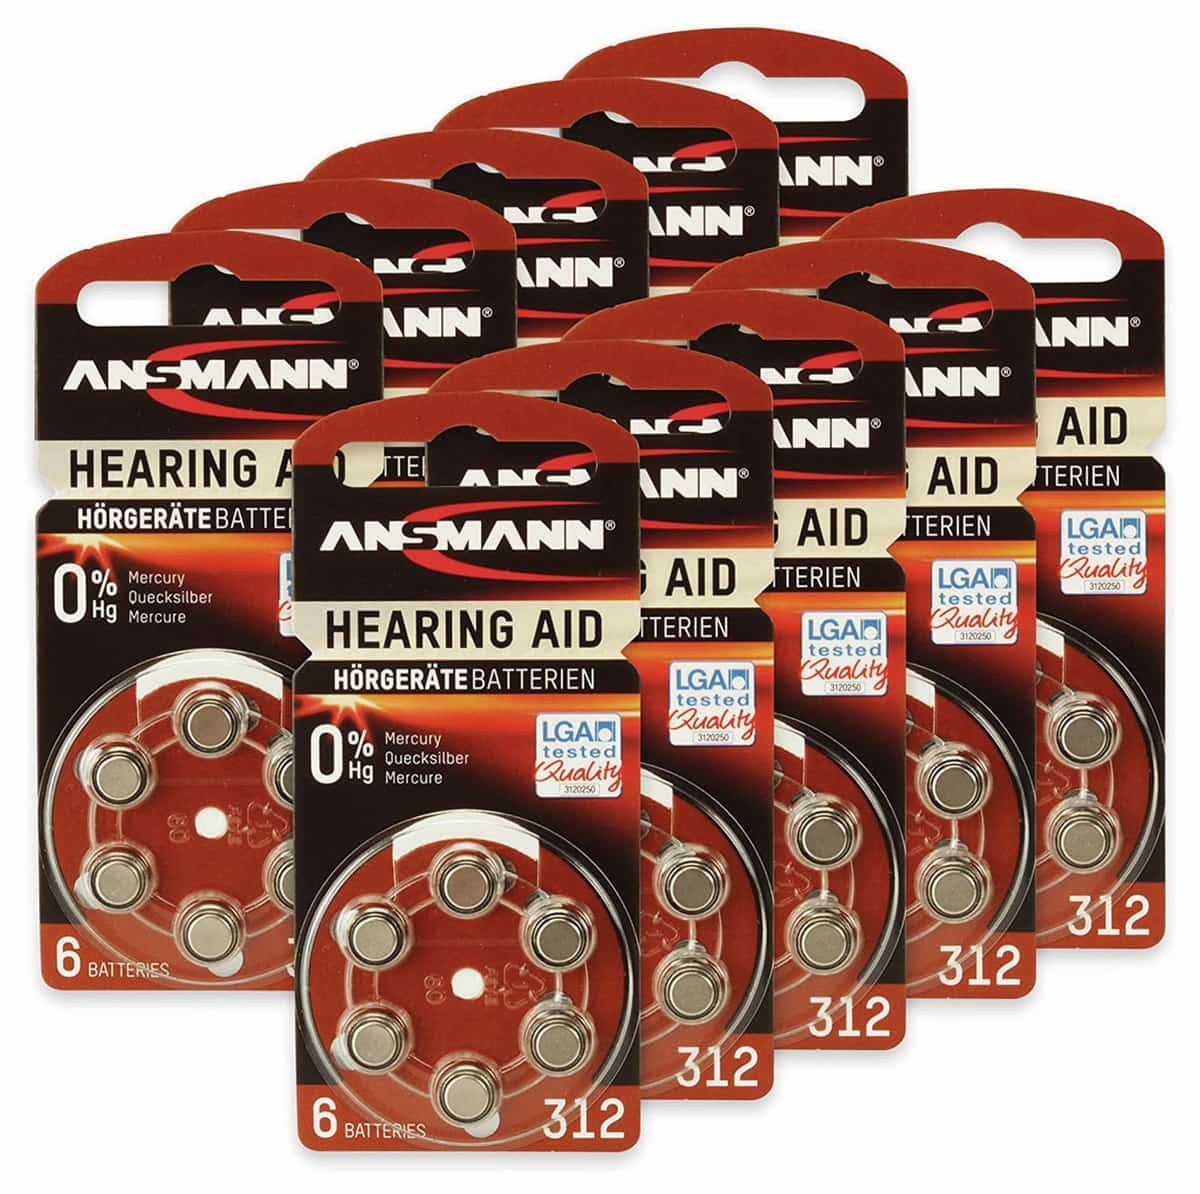 ANSMANN Hörgeräte-Batterie, HEARING AID, PR41, Größe 312, 60 Stück von Ansmann